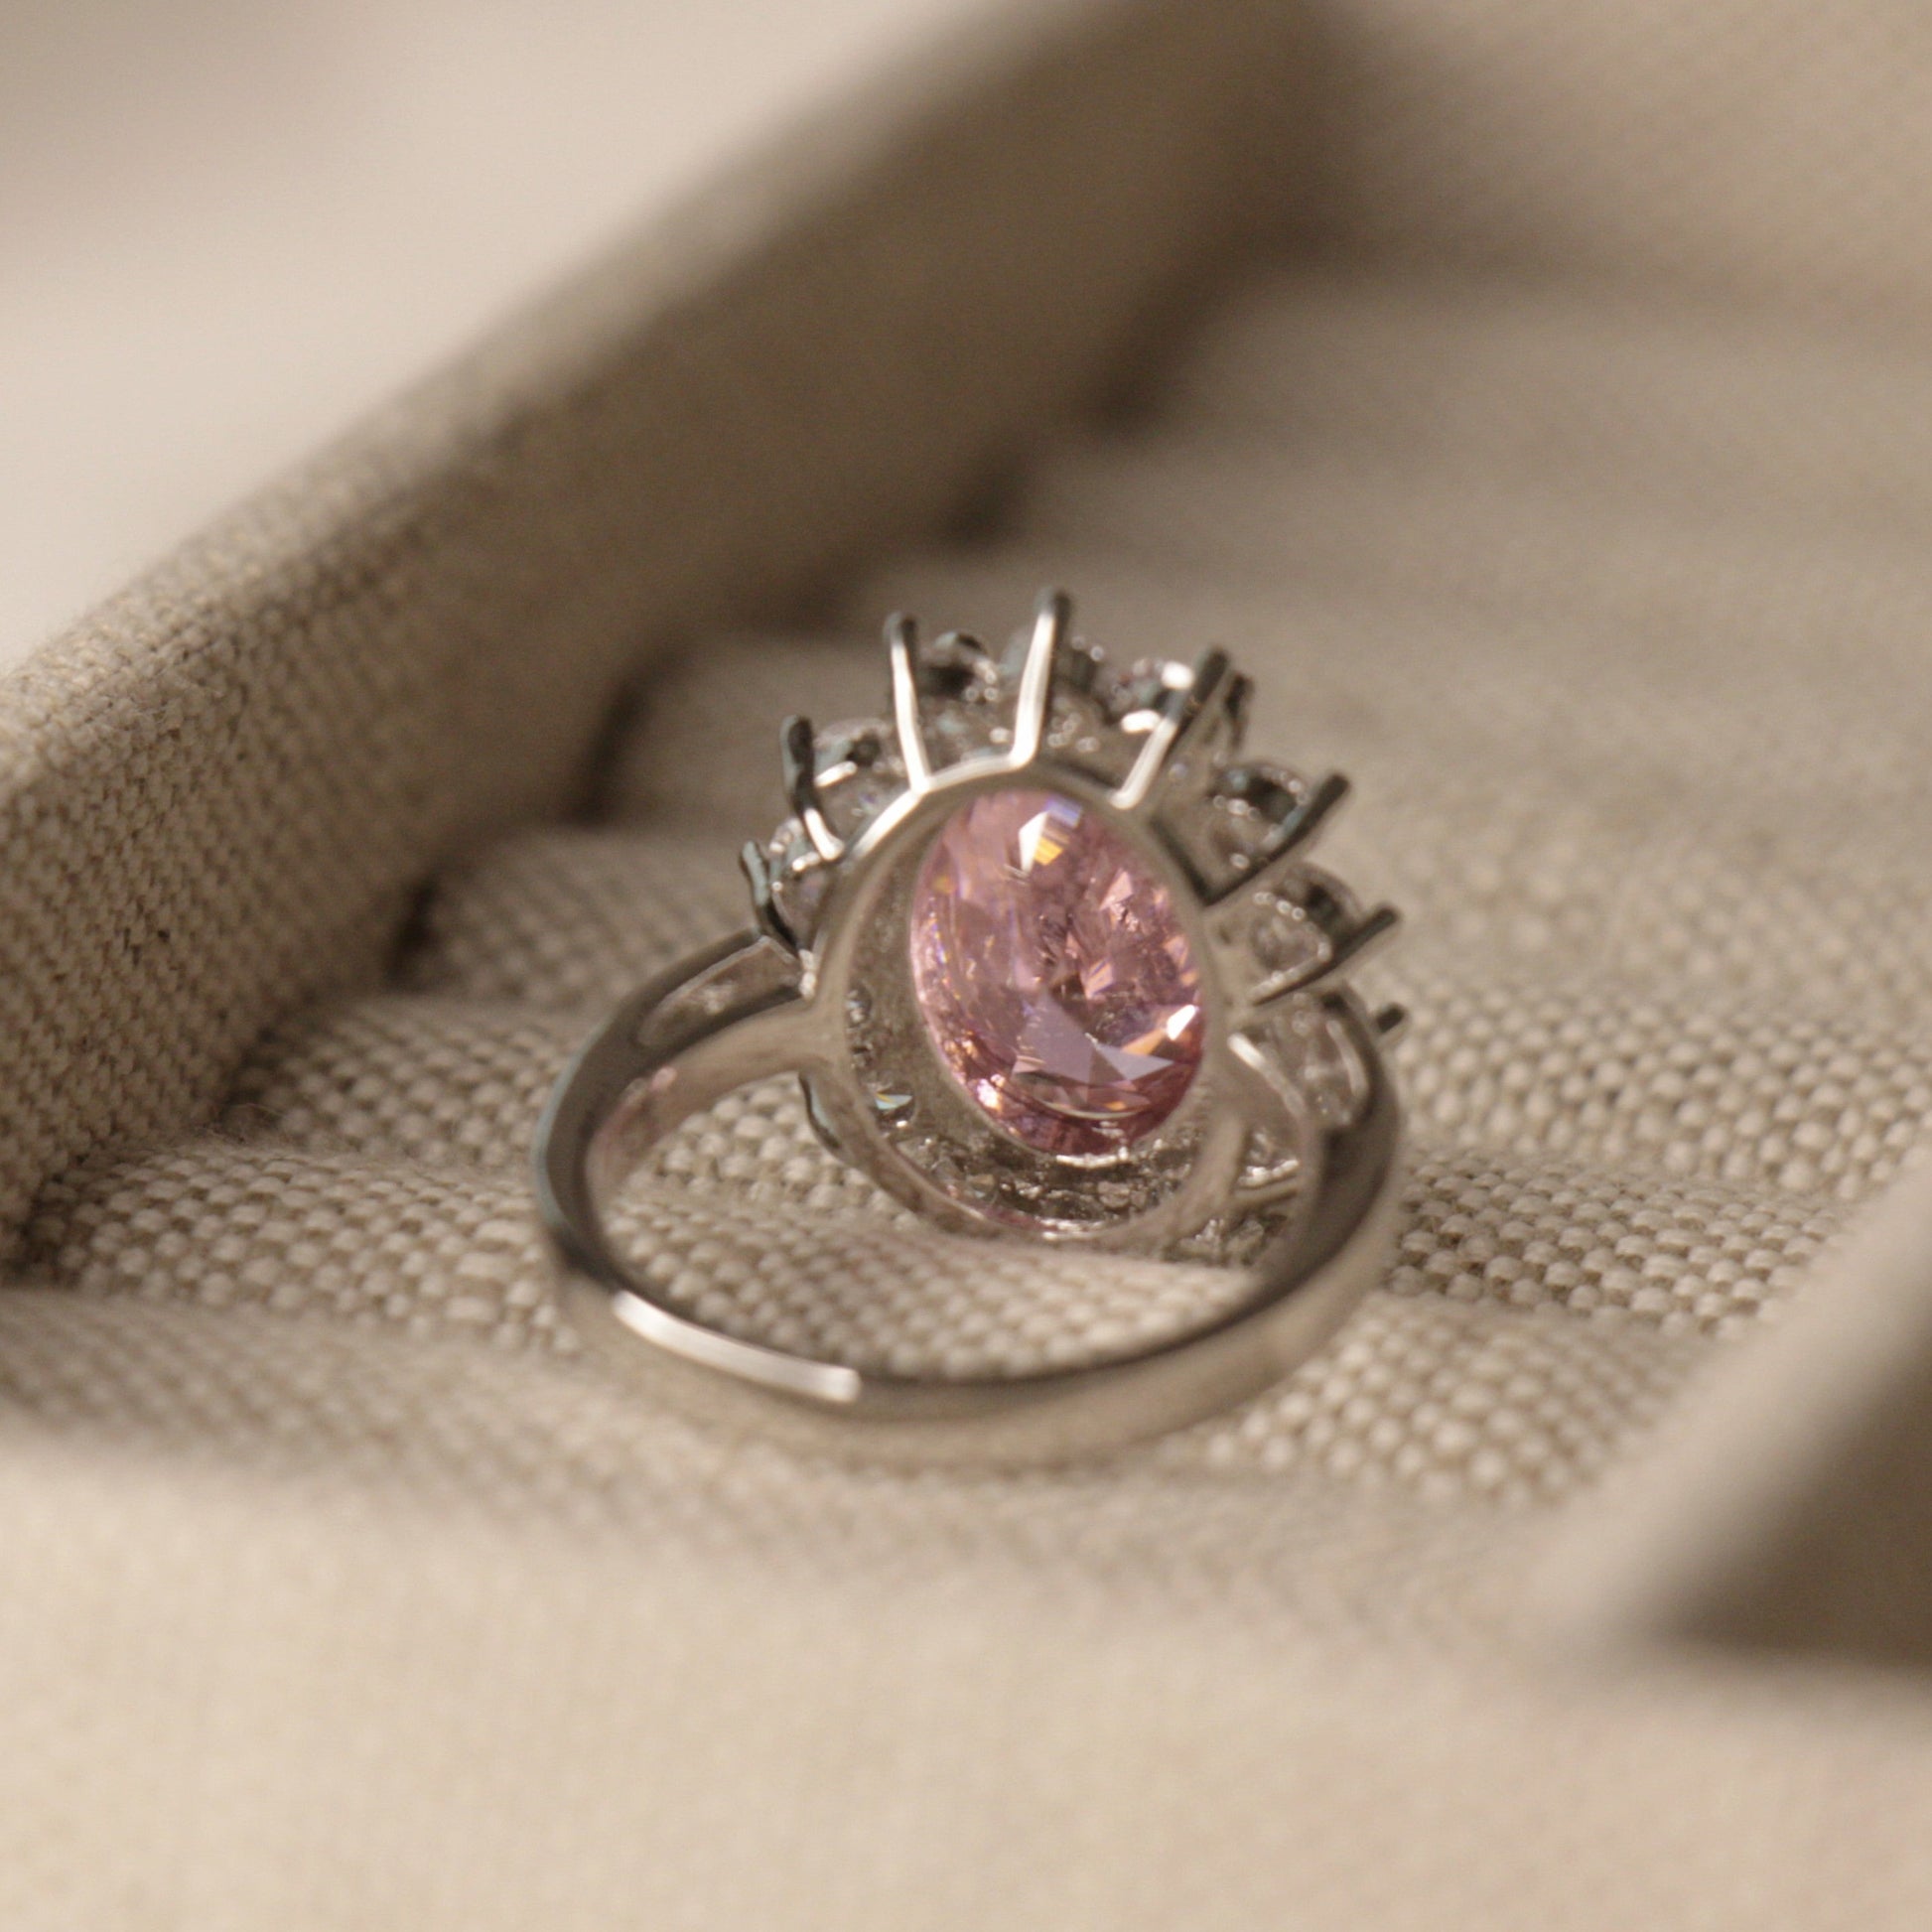 Lady Gaga’s oval purplish pink sapphire measures around 14 x 10mm 